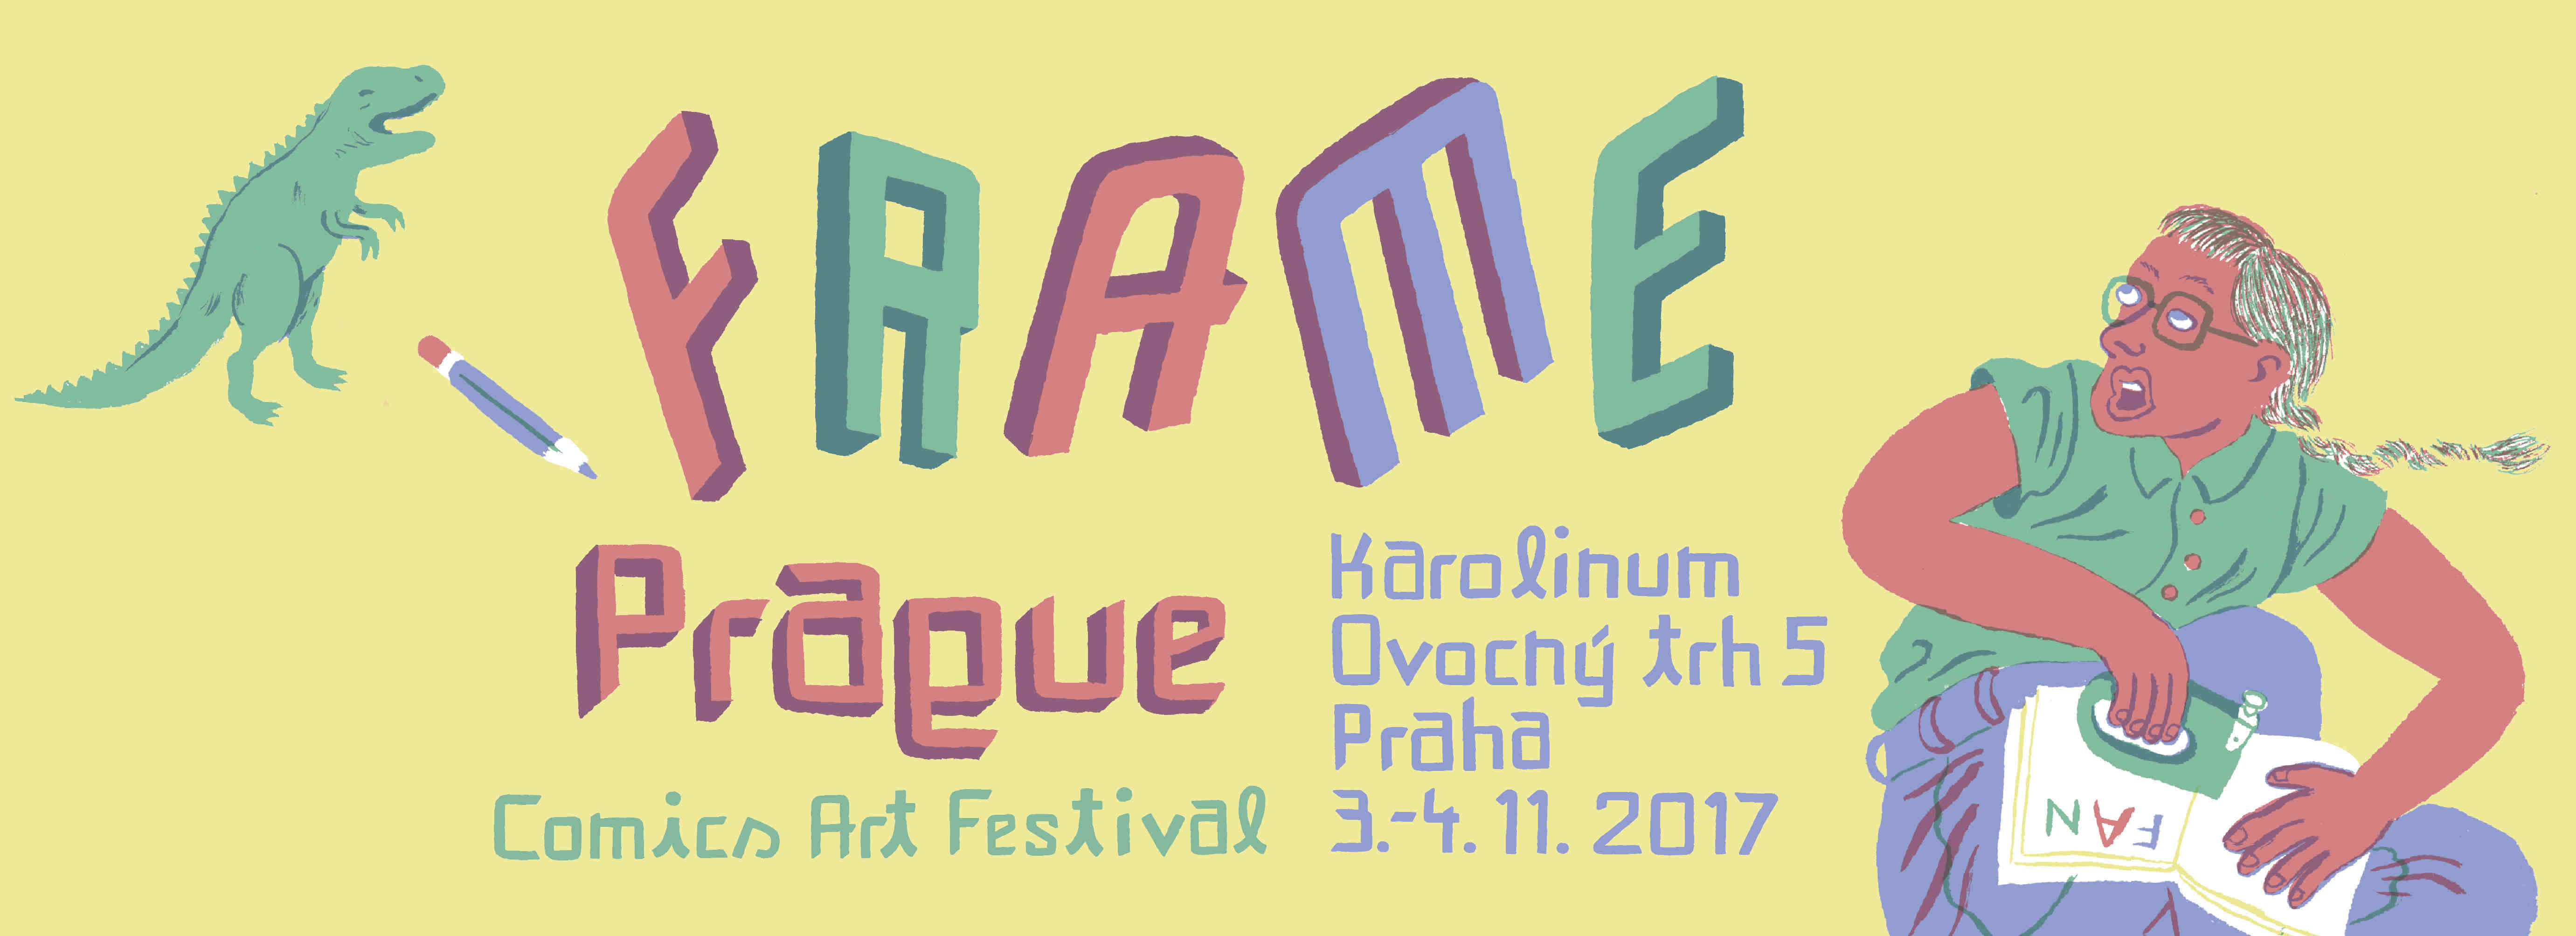 FRAME Prague Comics Art Festival